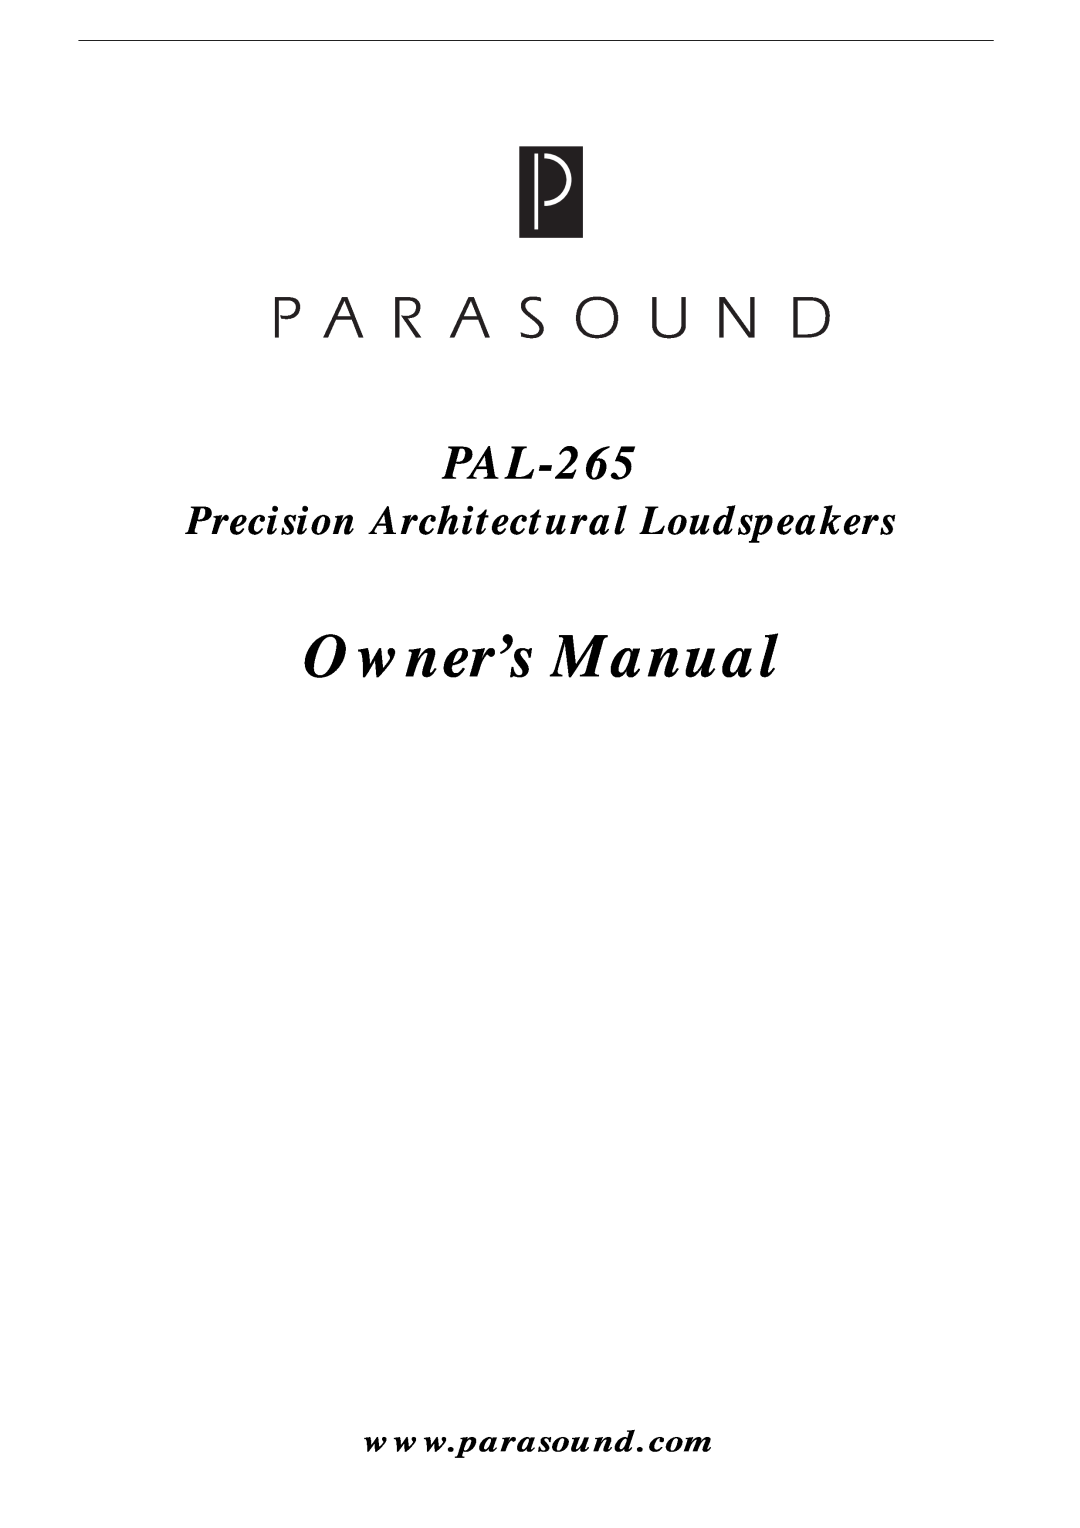 Parasound PAL-265 owner manual Precision Architectural Loudspeakers 